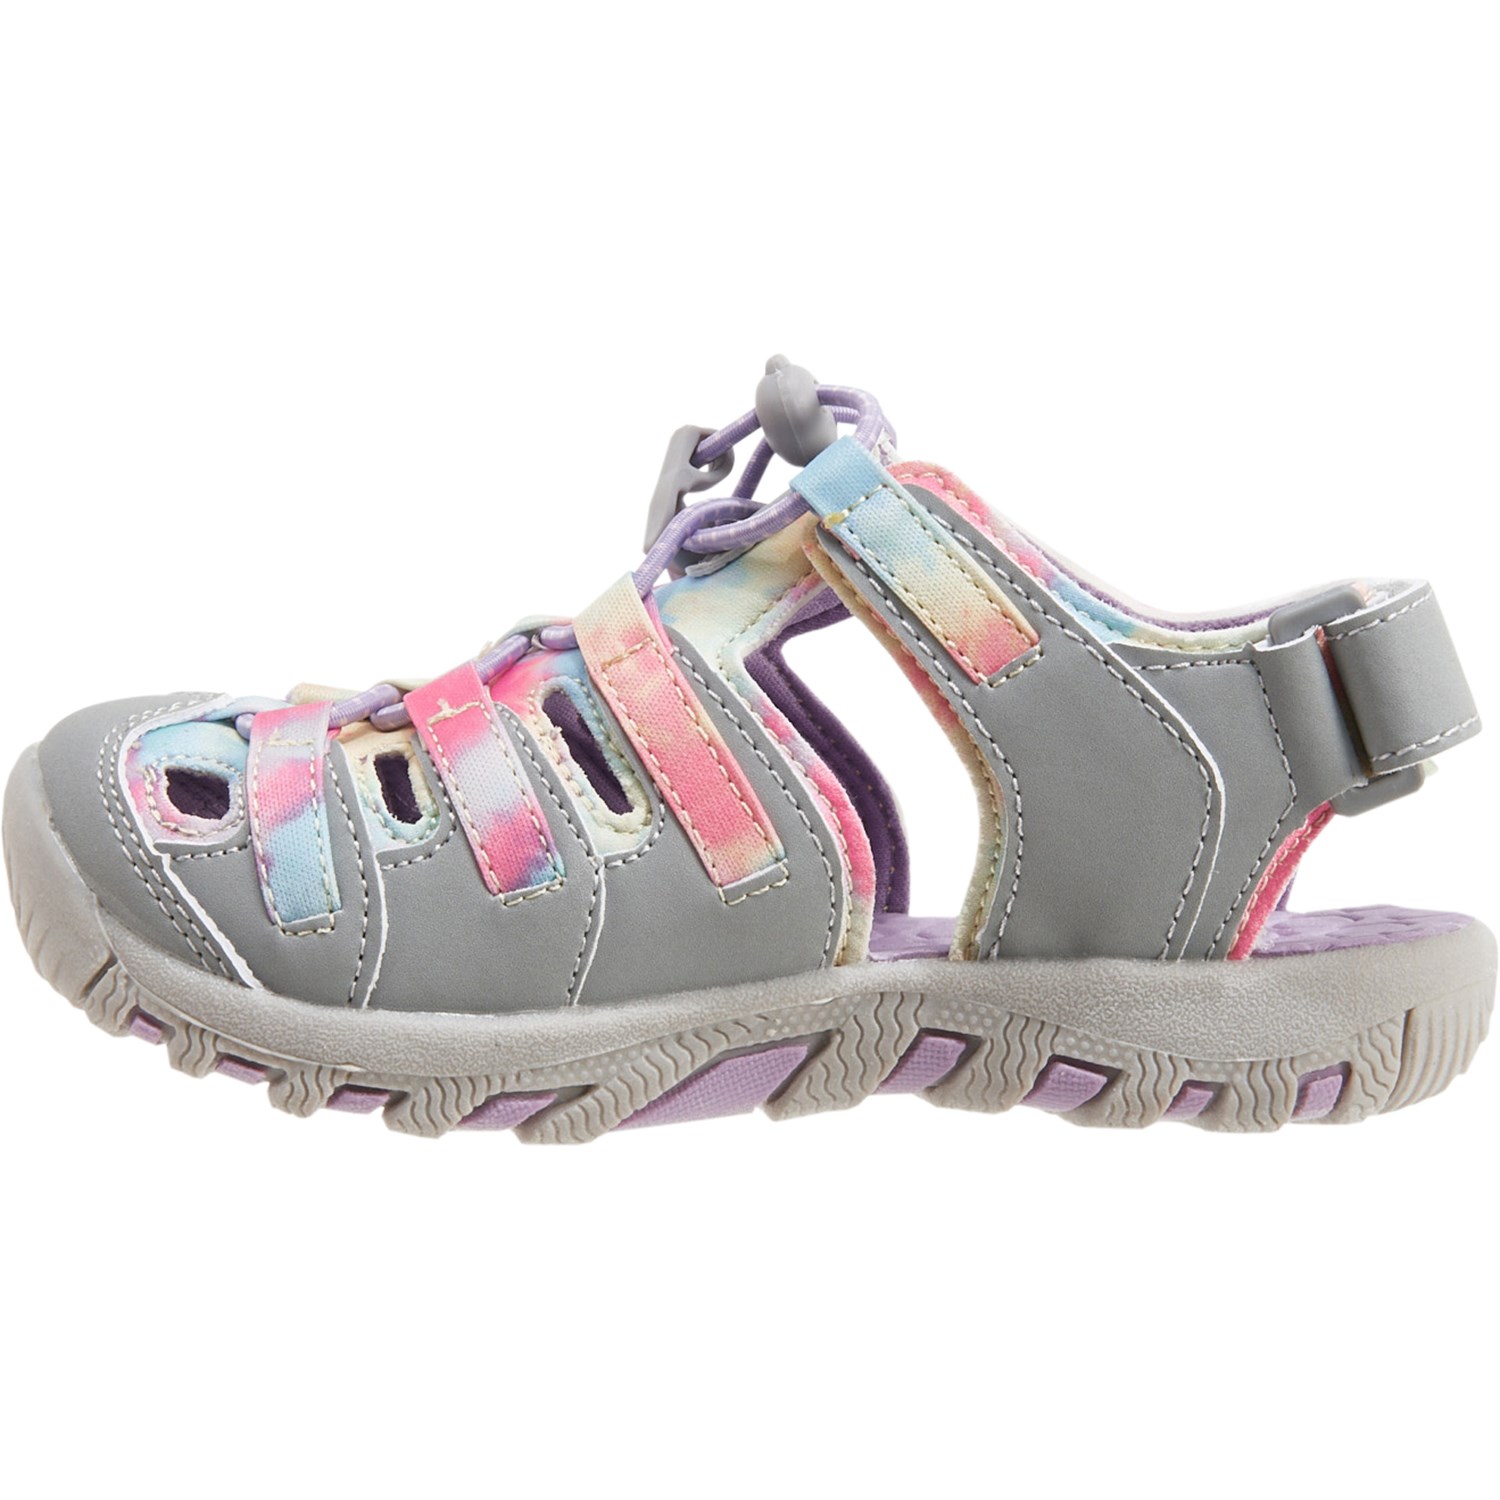 Khombu Cypress Sandals (For Toddler Girls) - Save 25%